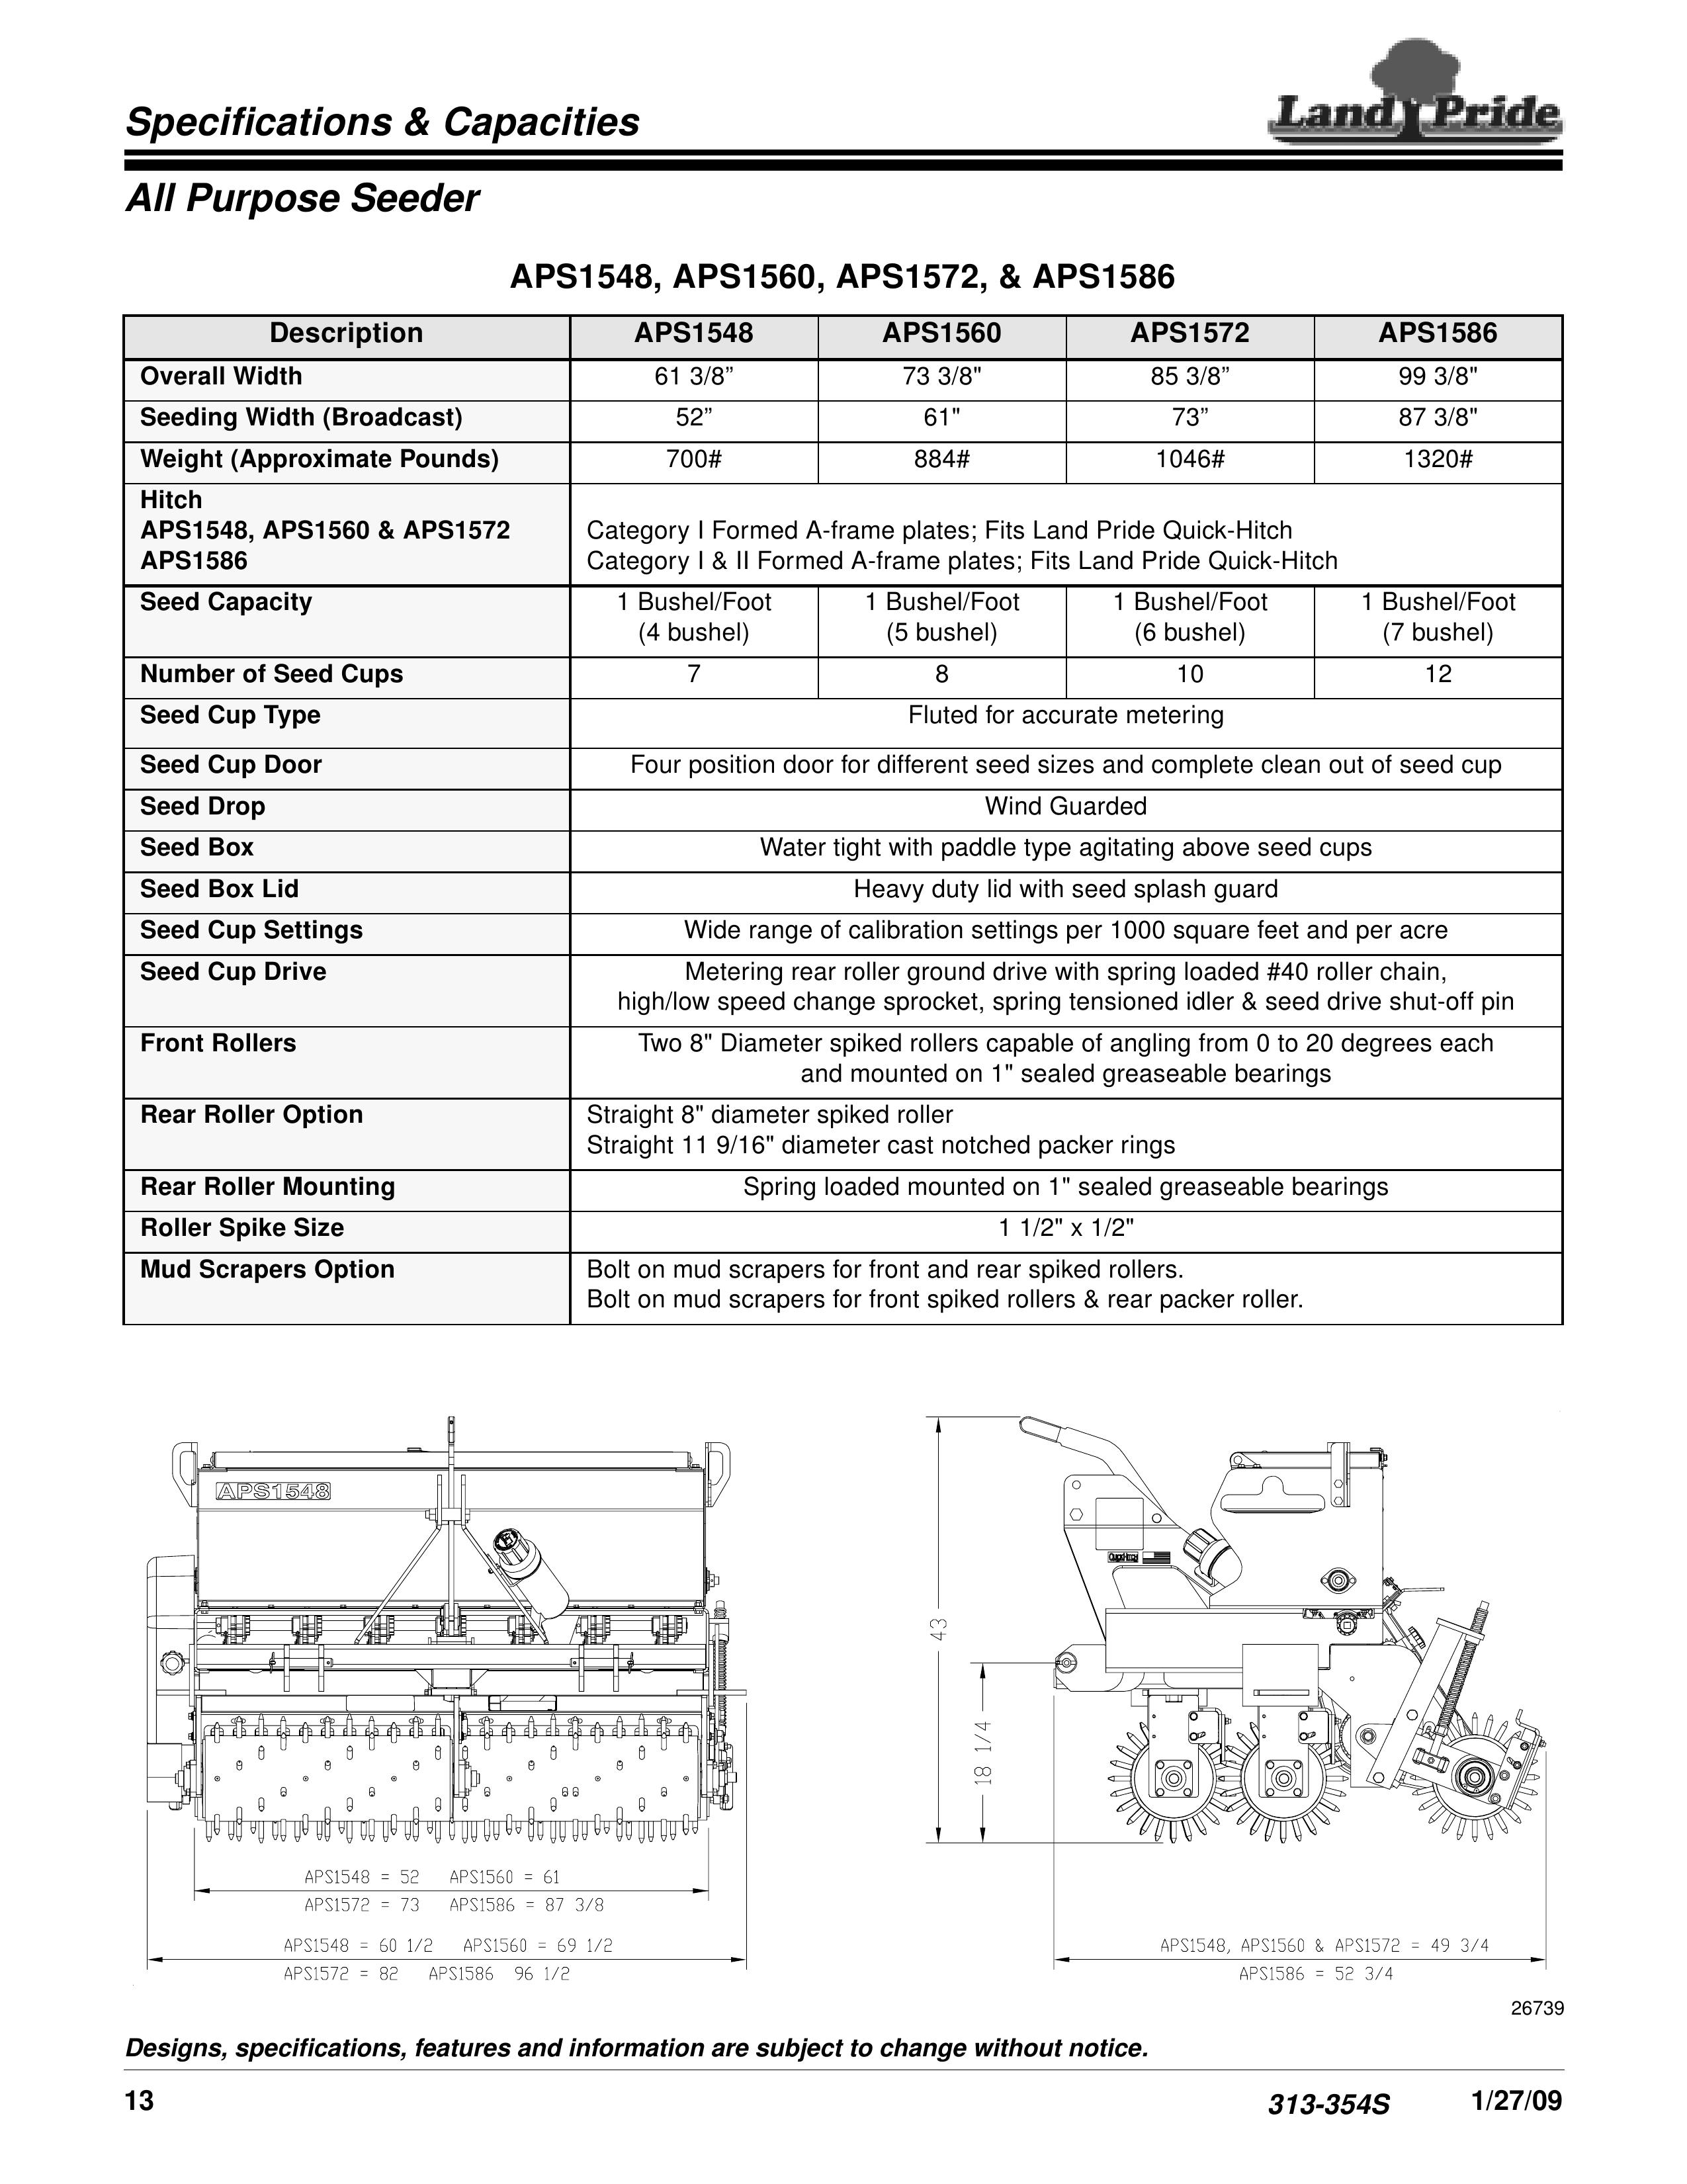 Land Pride APS1560 Spreader User Manual